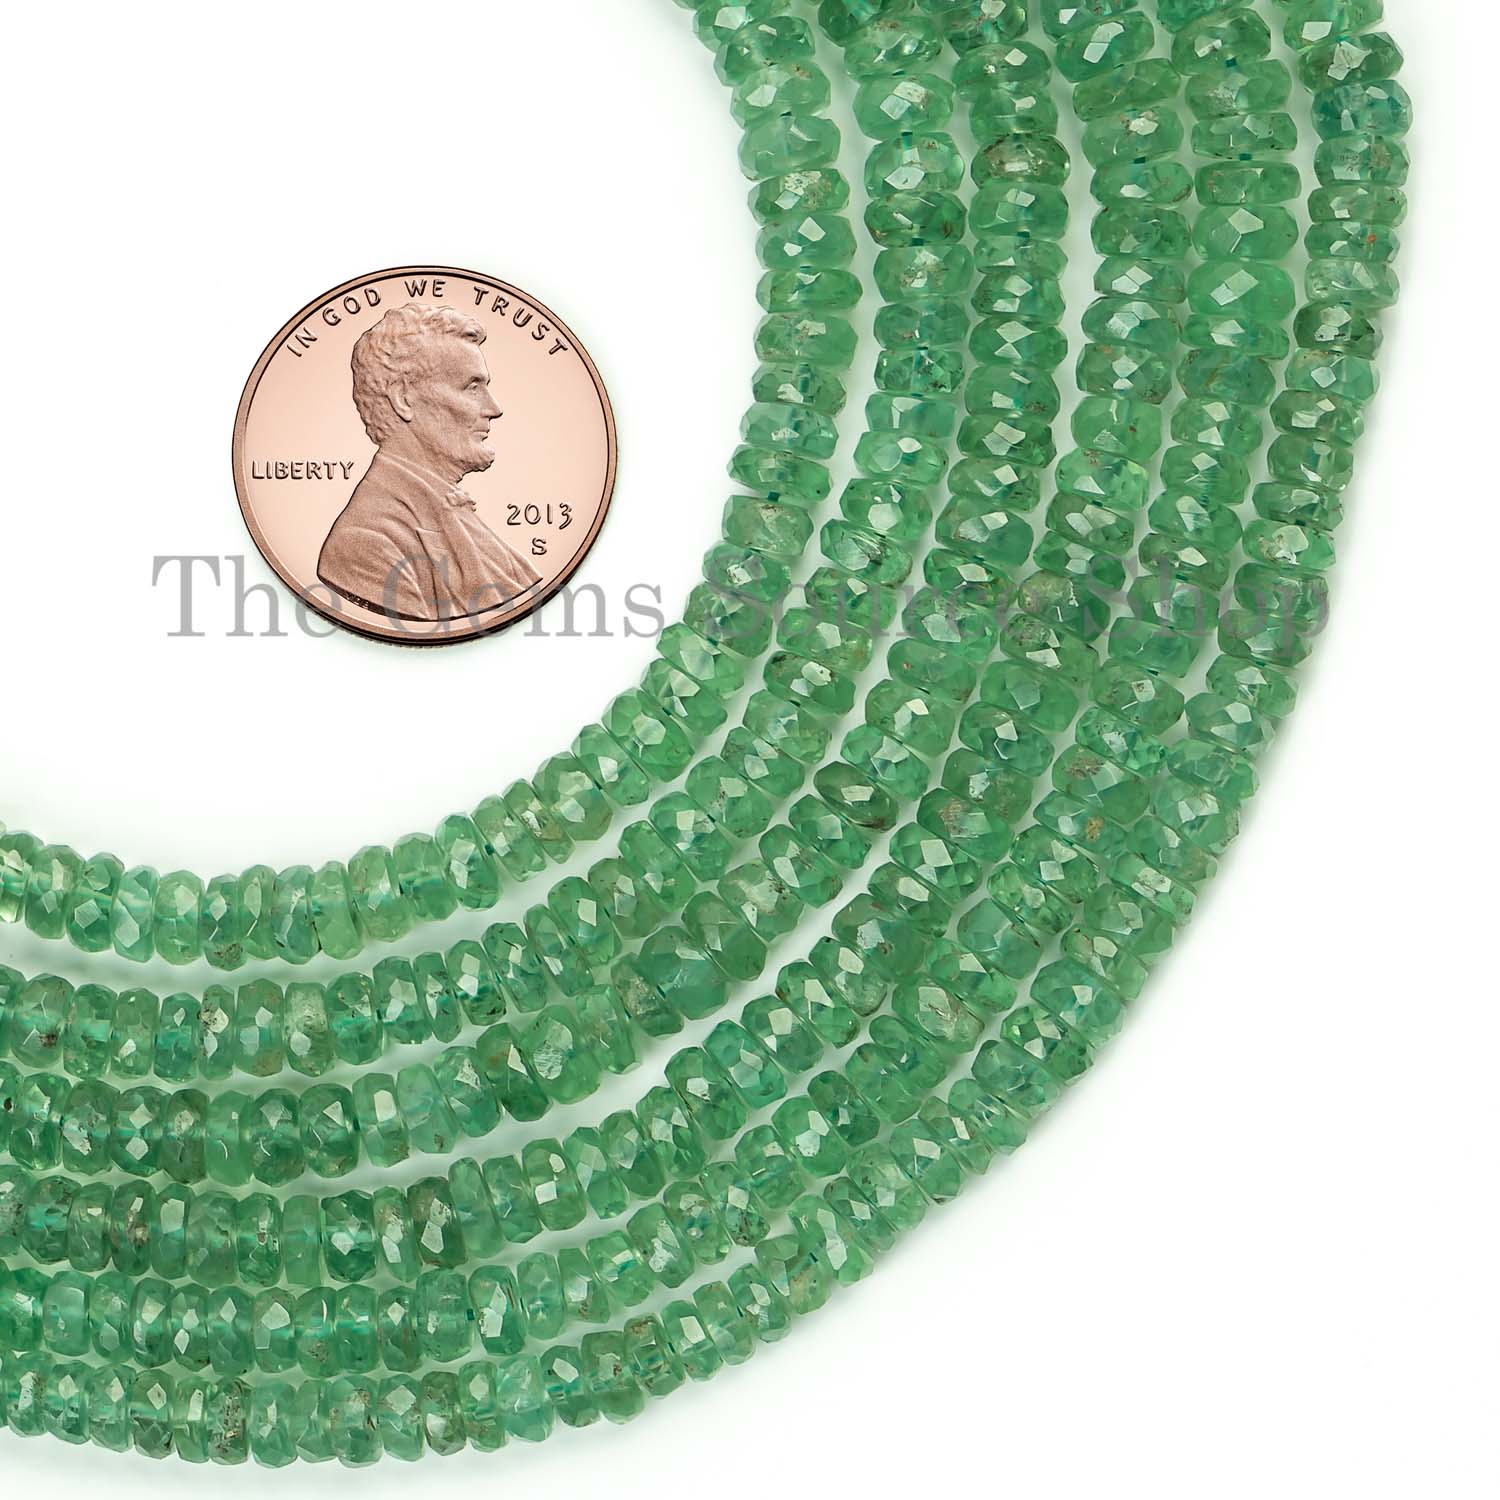 Mint Kyanite Beads, Mint Kyanite Rondelle Beads, Mint Kyanite Faceted Beads, Mint Kyanite Gemstone Beads